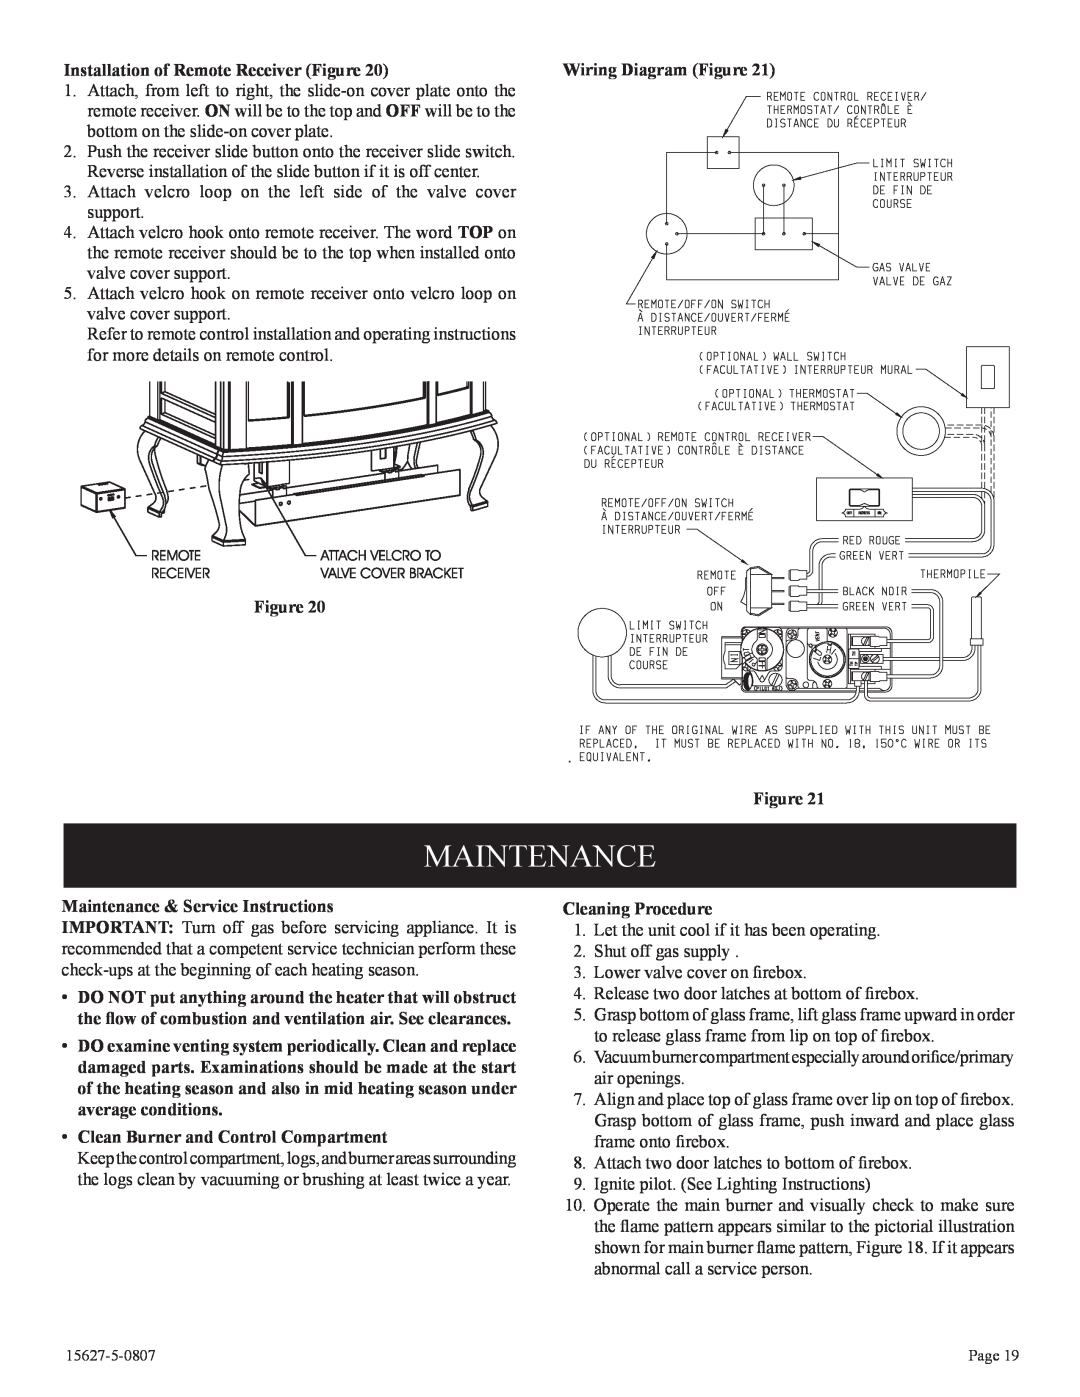 Empire Comfort Systems CIBV-30-20 Maintenance, Installation of Remote Receiver Figure, Wiring Diagram Figure 